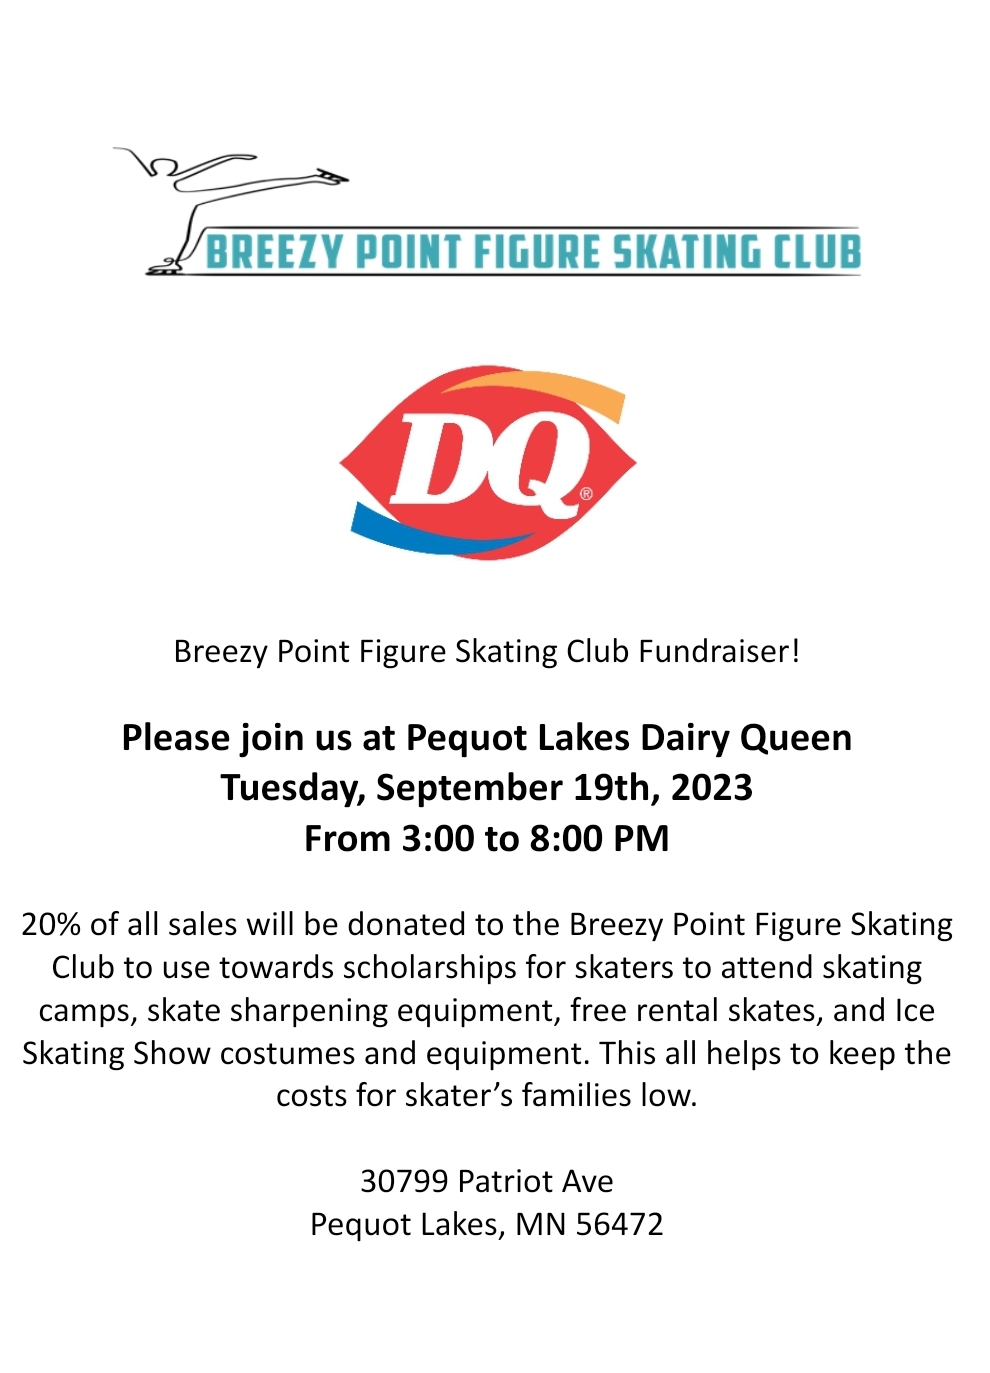 DQ Fundraiser - Breezy Point Figure skating